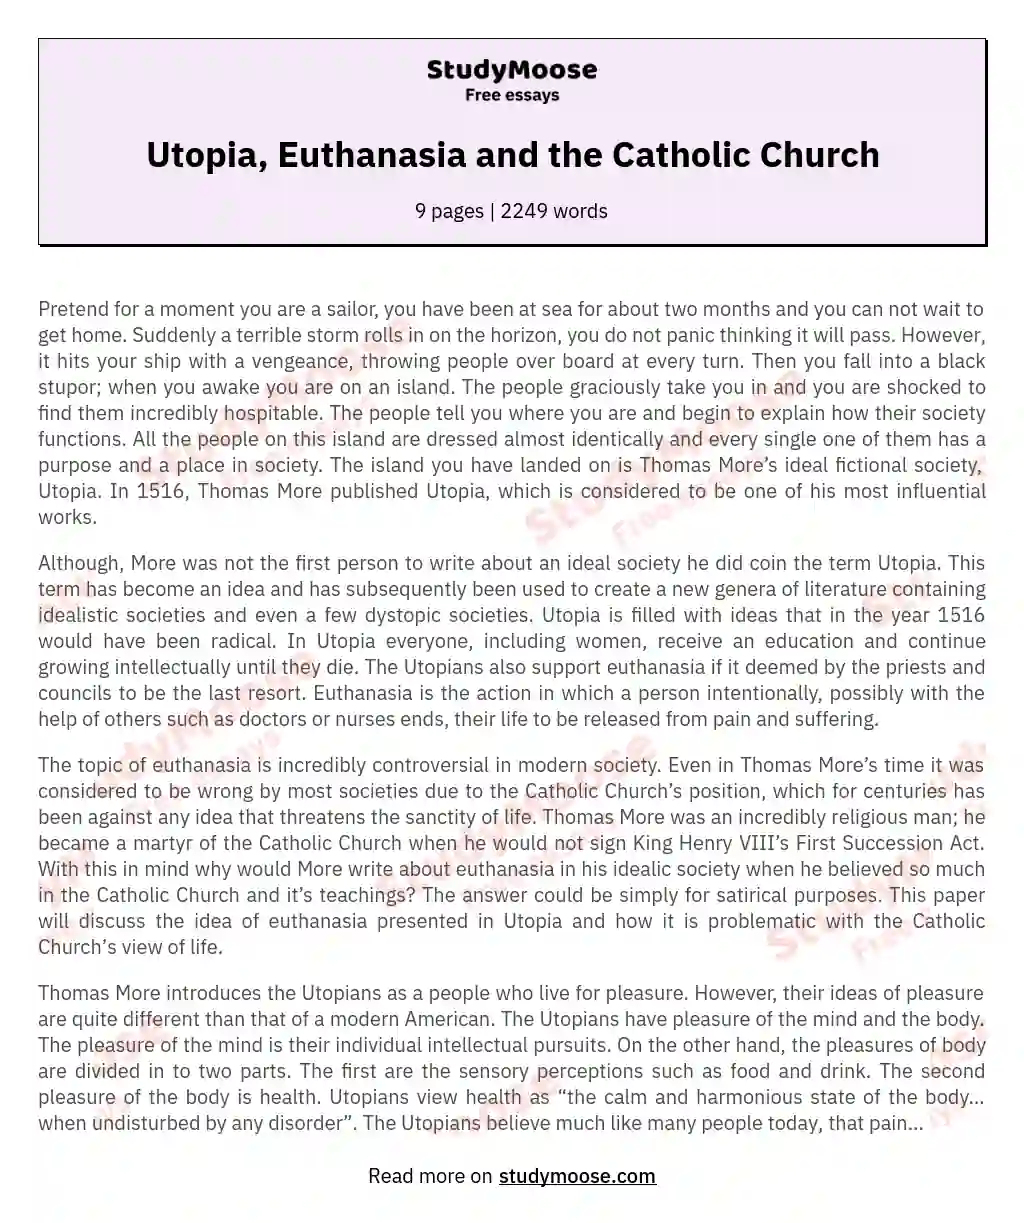 Utopia, Euthanasia and the Catholic Church essay